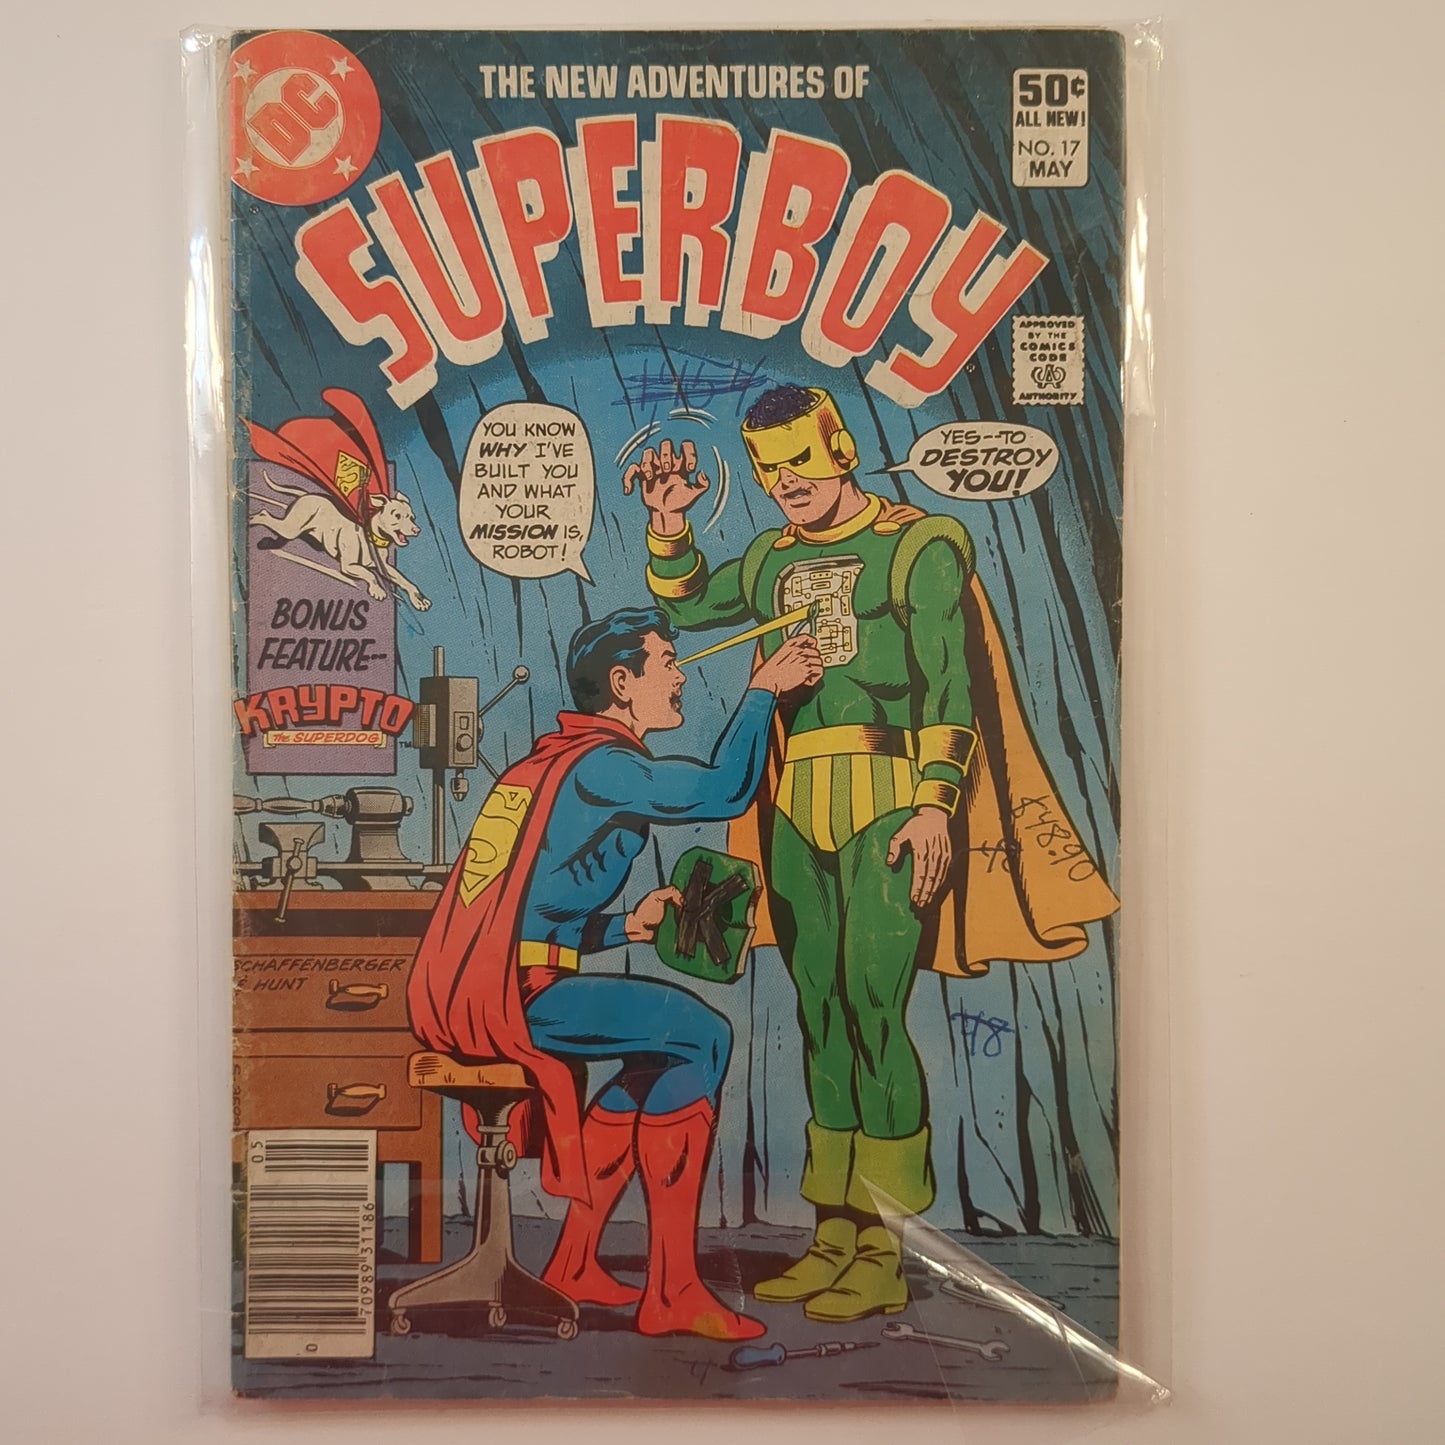 New Adventures of Superboy (1980)